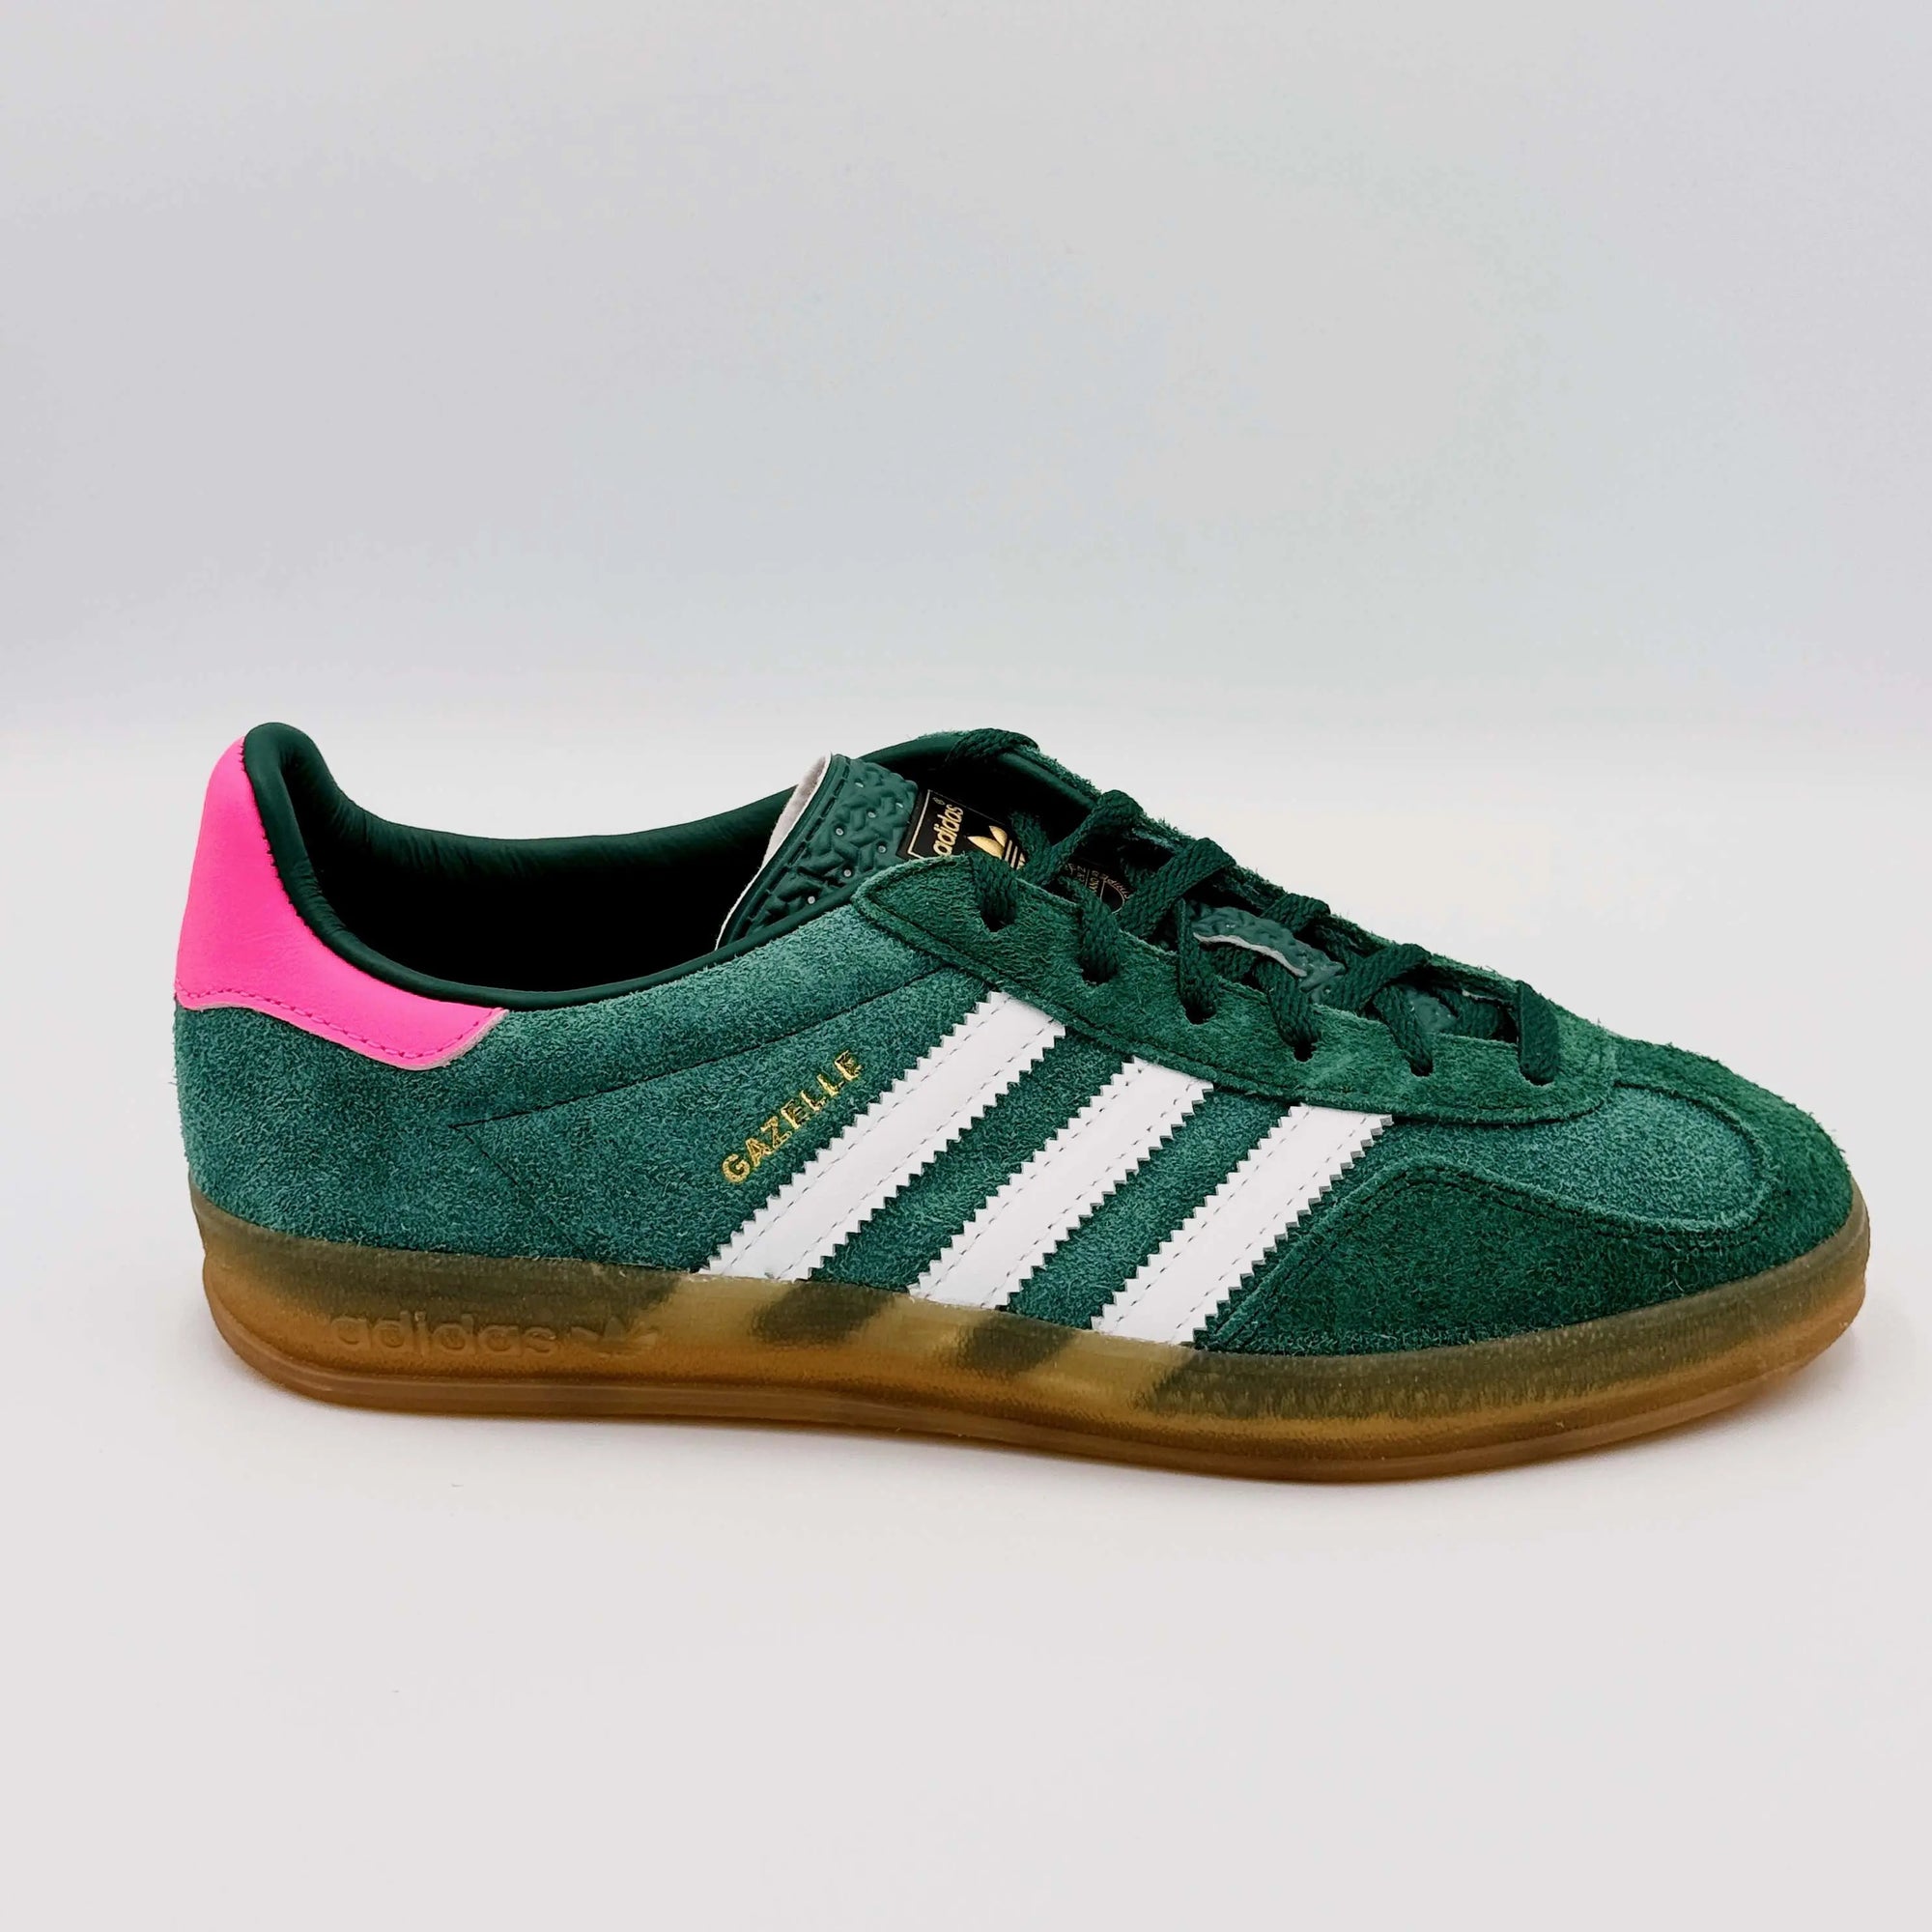 Adidas Gazelle Indoor Collegiate Green Lucid Pink  SA Sneakers